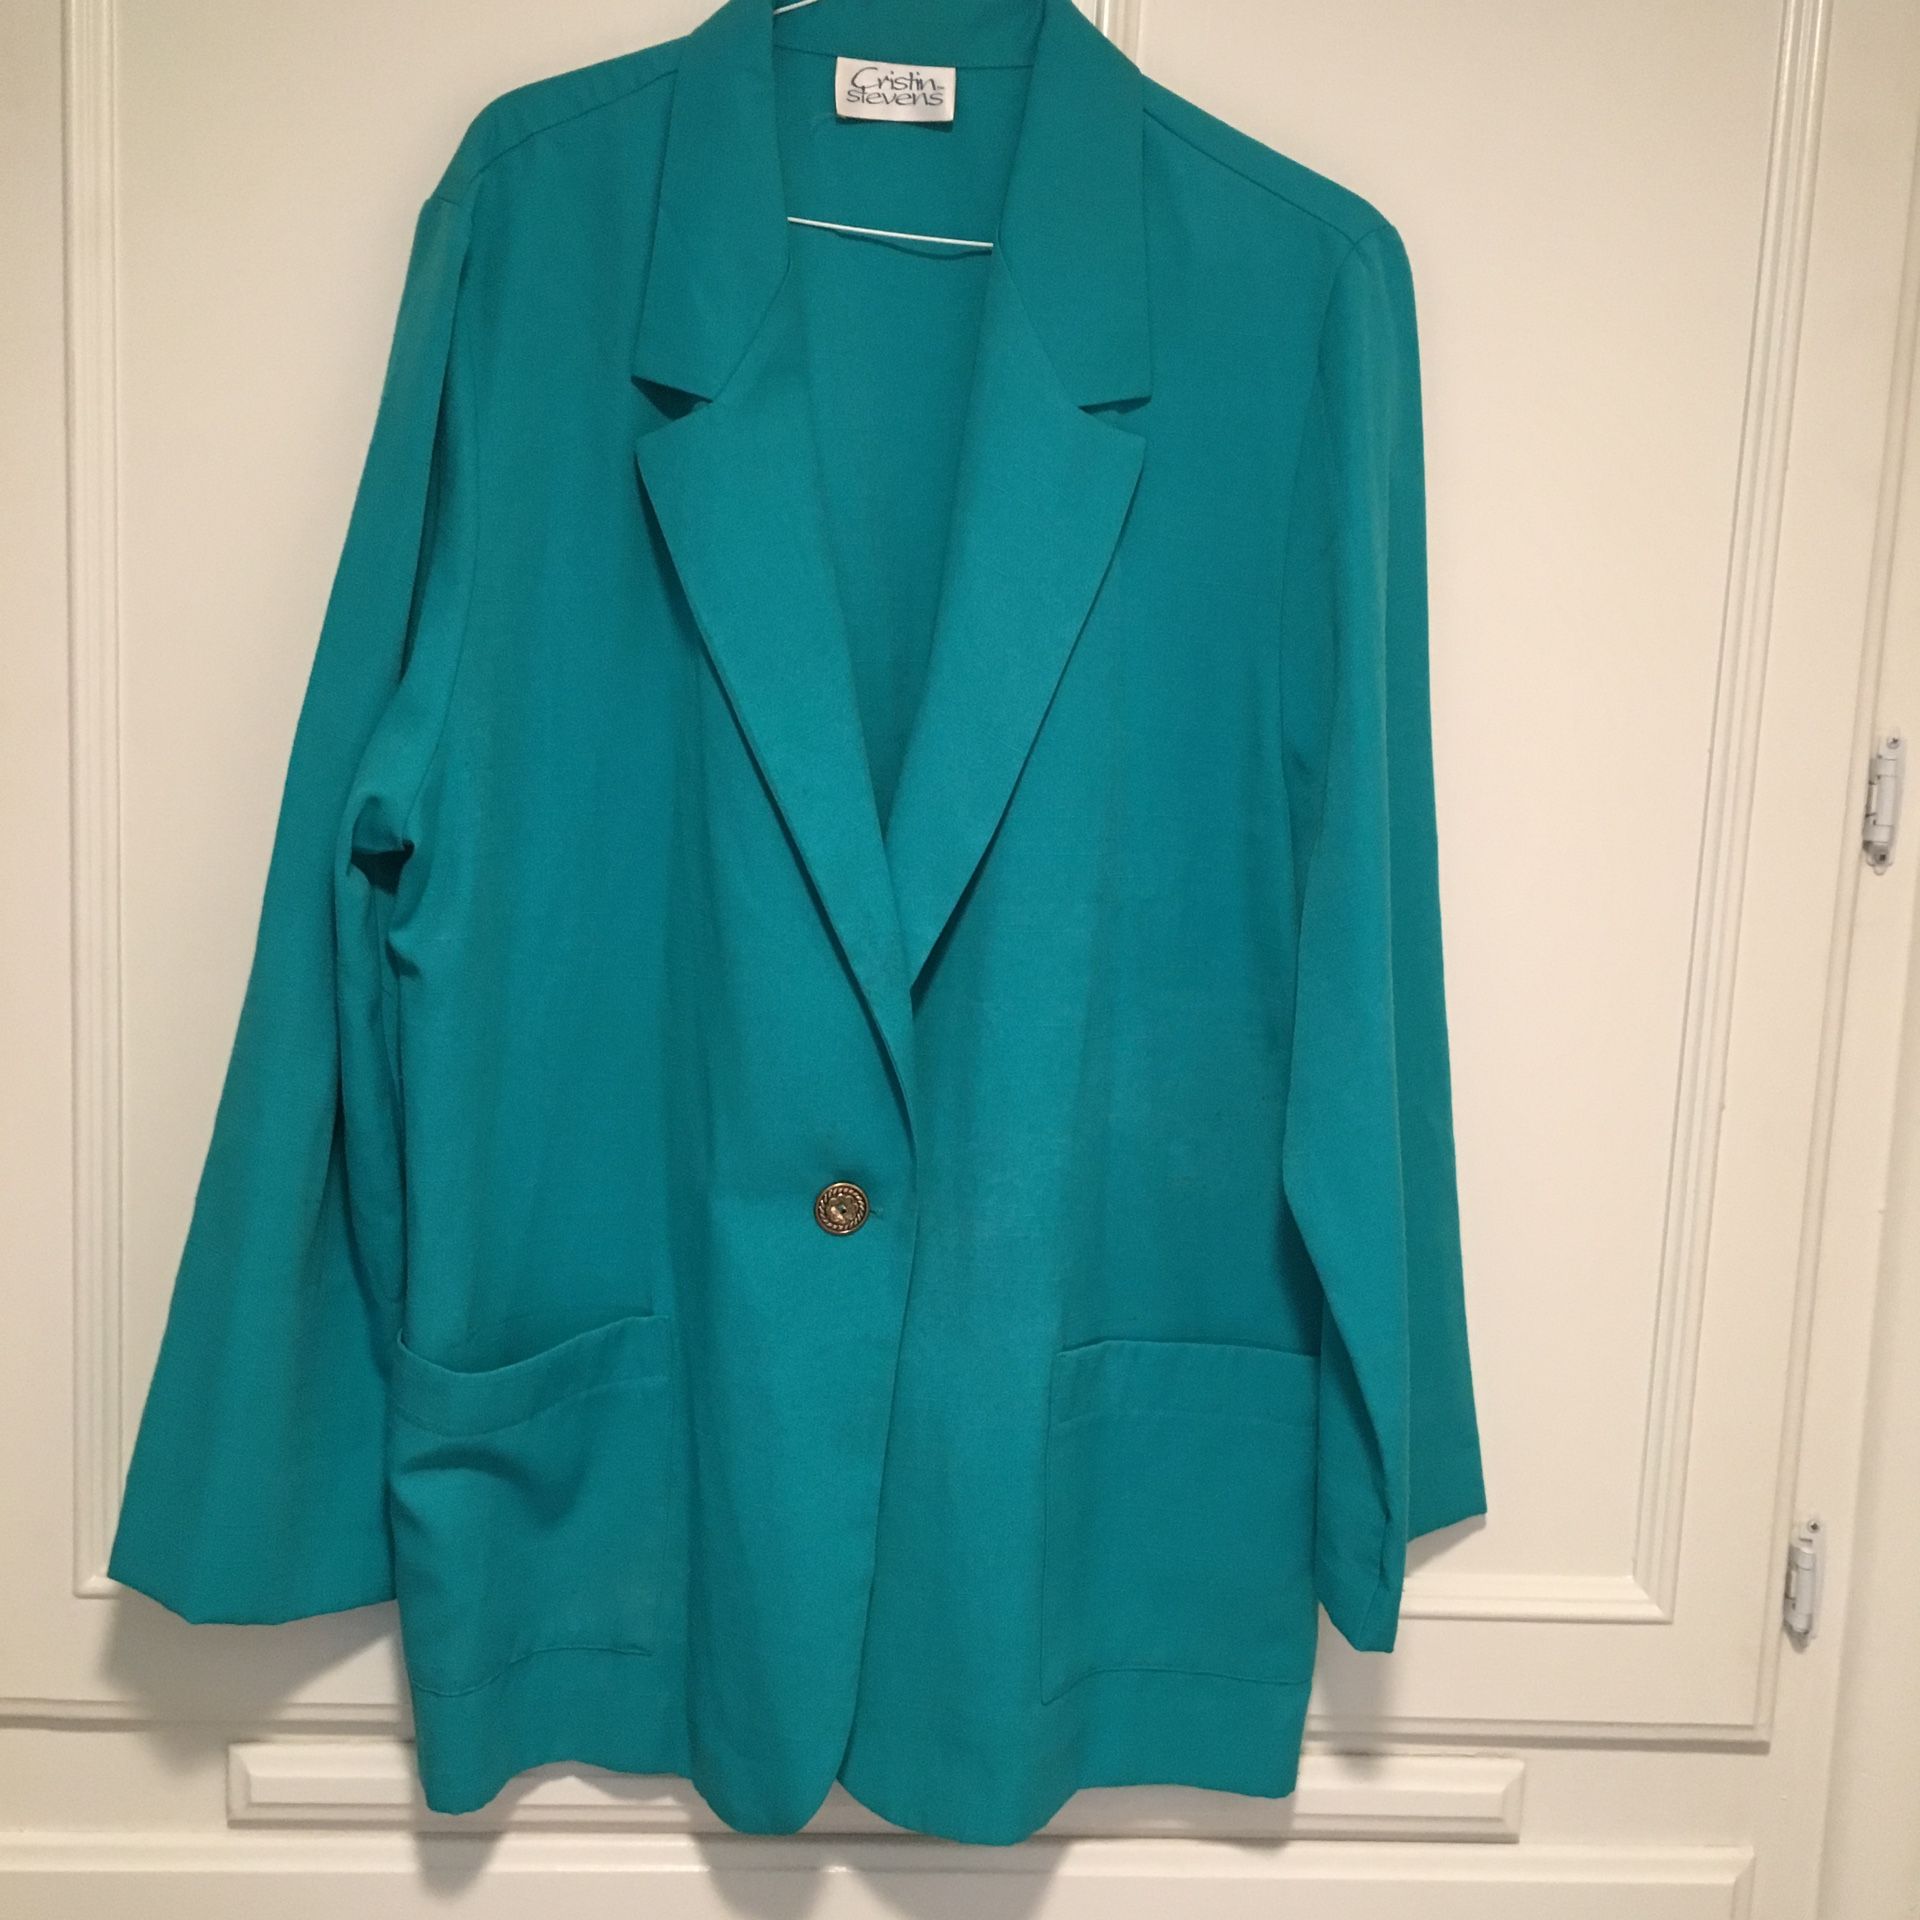 Woman’s lightweight turquoise jacket/blazer size Large